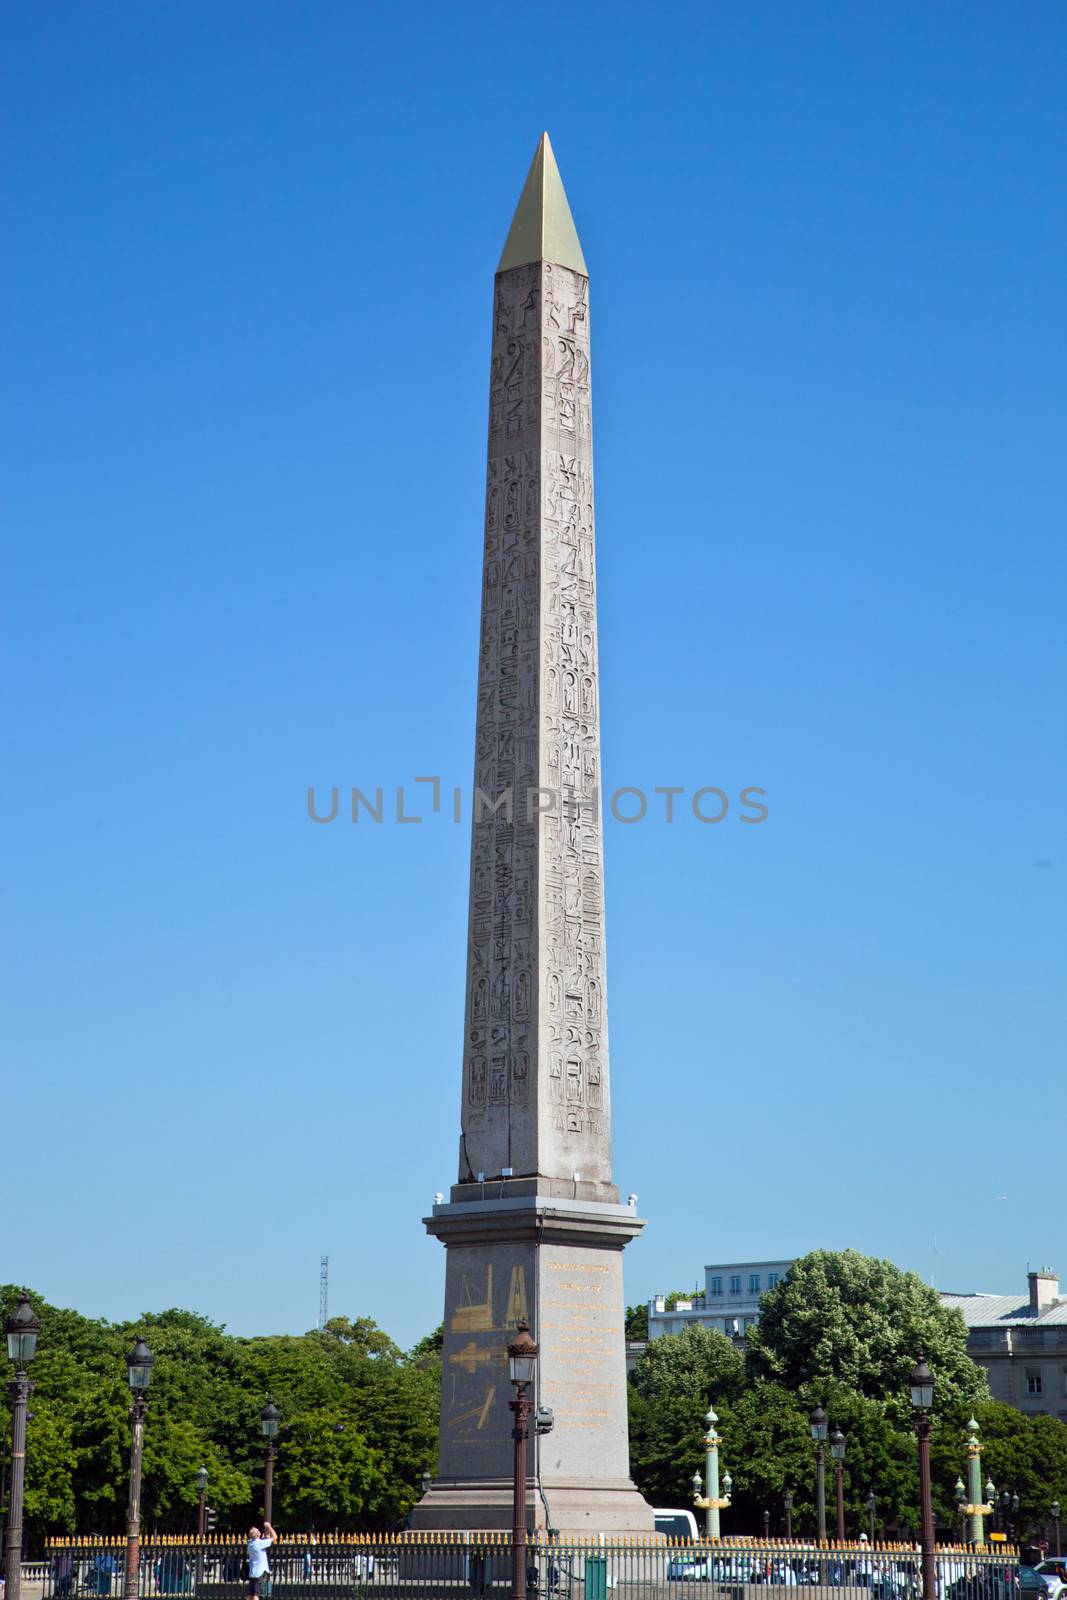 The Luxor Obelisk at the Place de la Concorde in Paris, France by photocreo